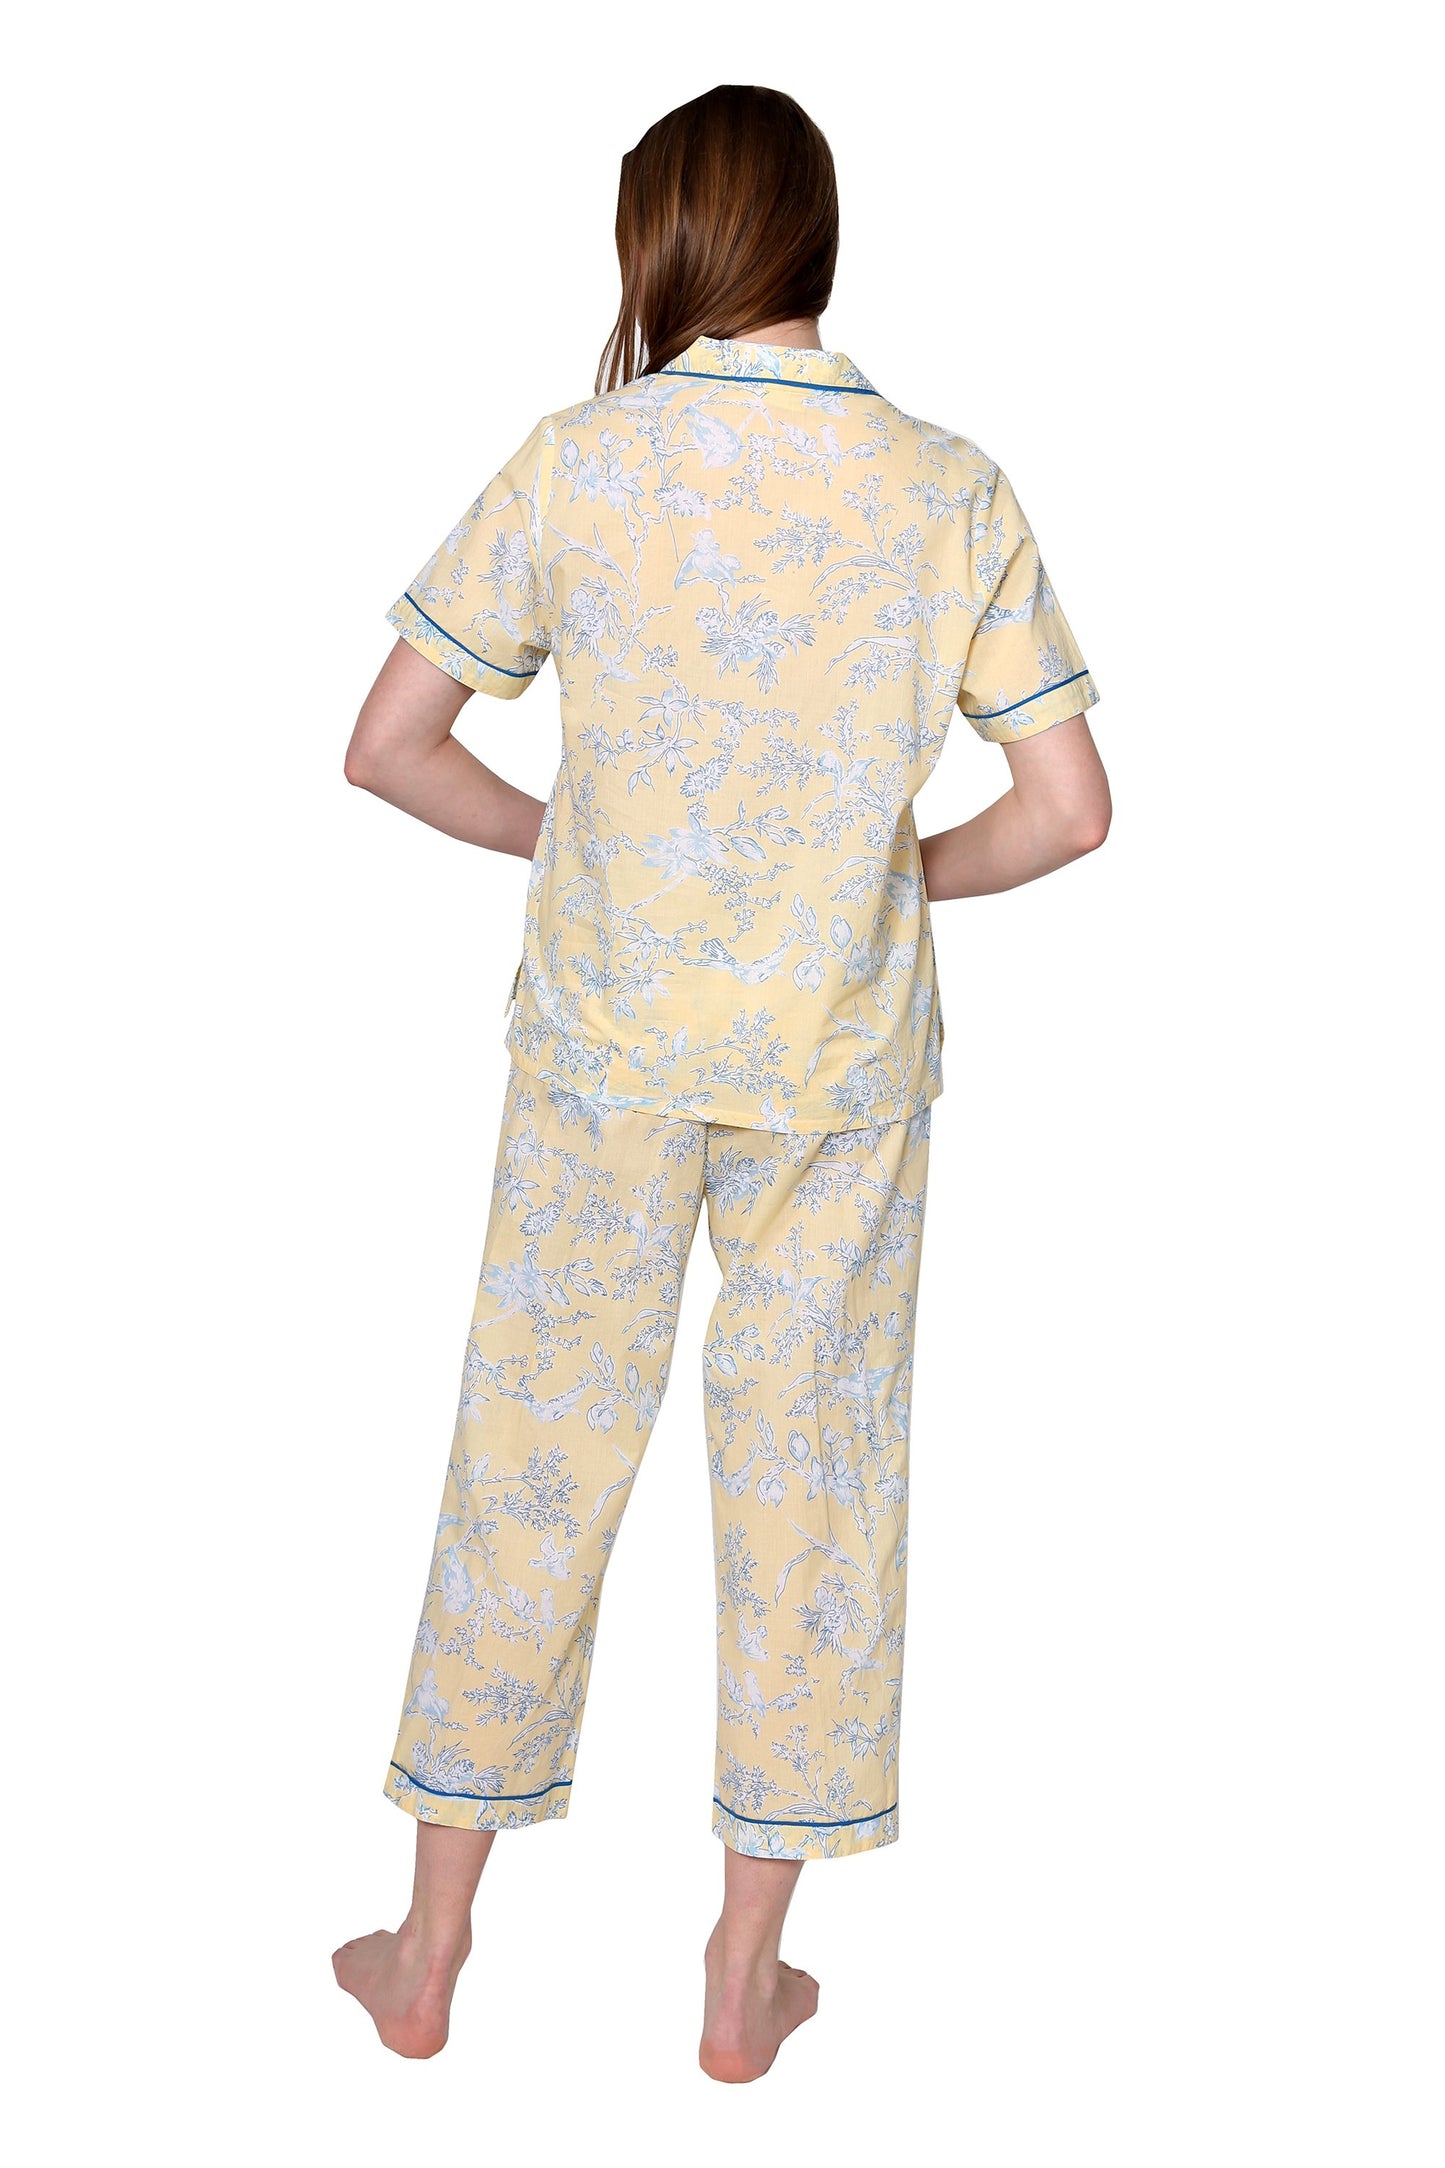 100% Cotton Floral Print Pyjamas 1467 - Yellow/Blue